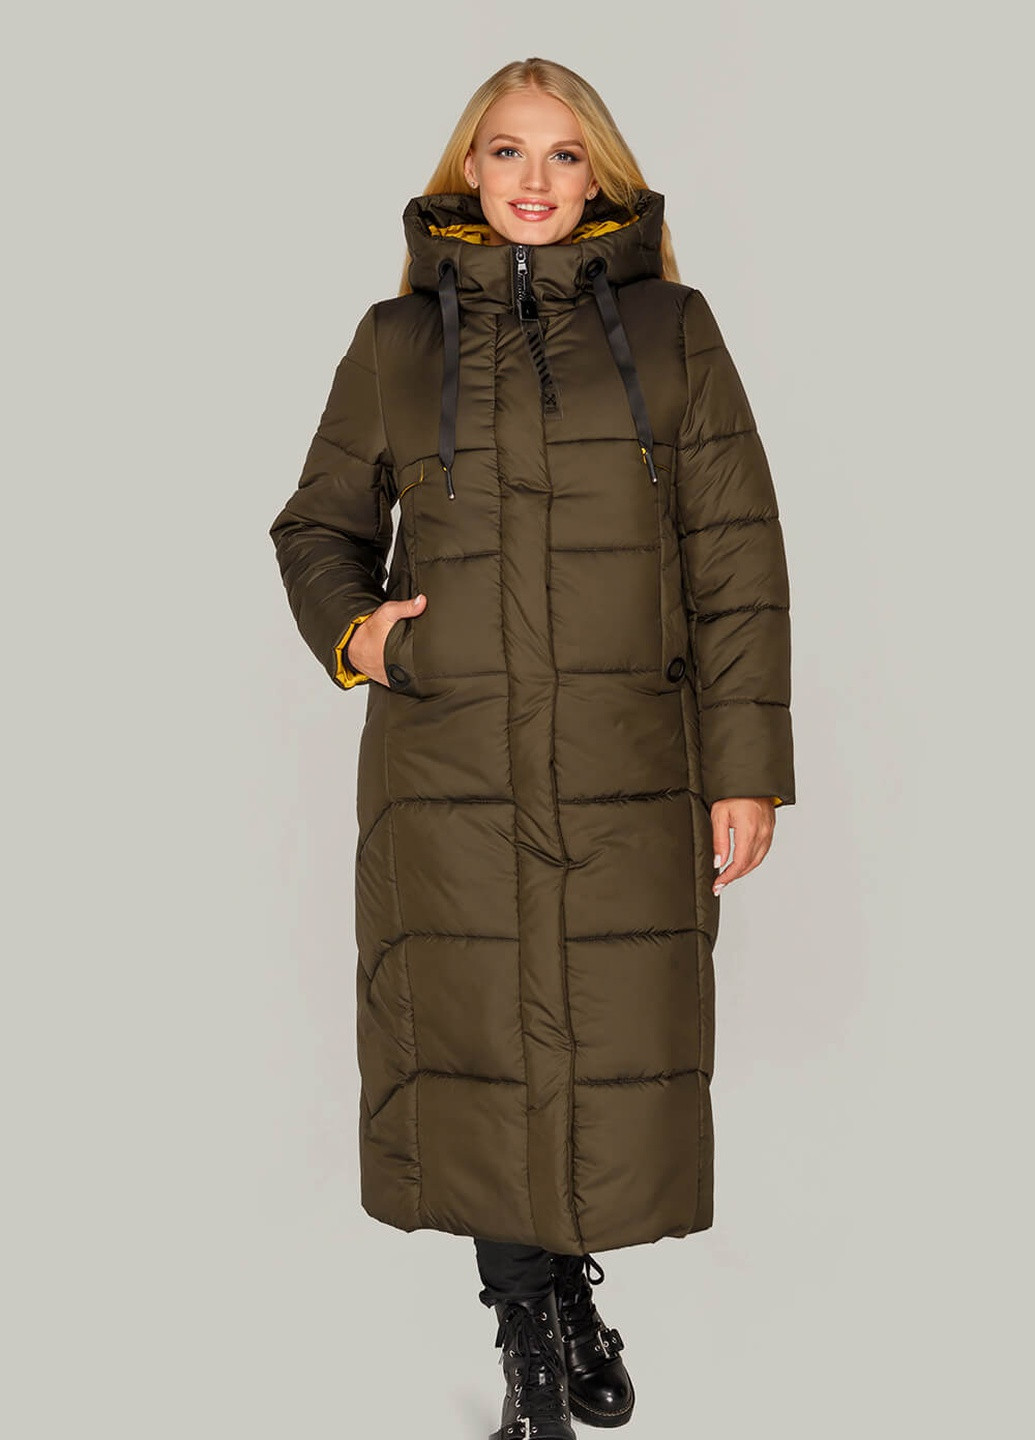 Оливковая (хаки) зимняя куртка-пальто сандра MioRichi